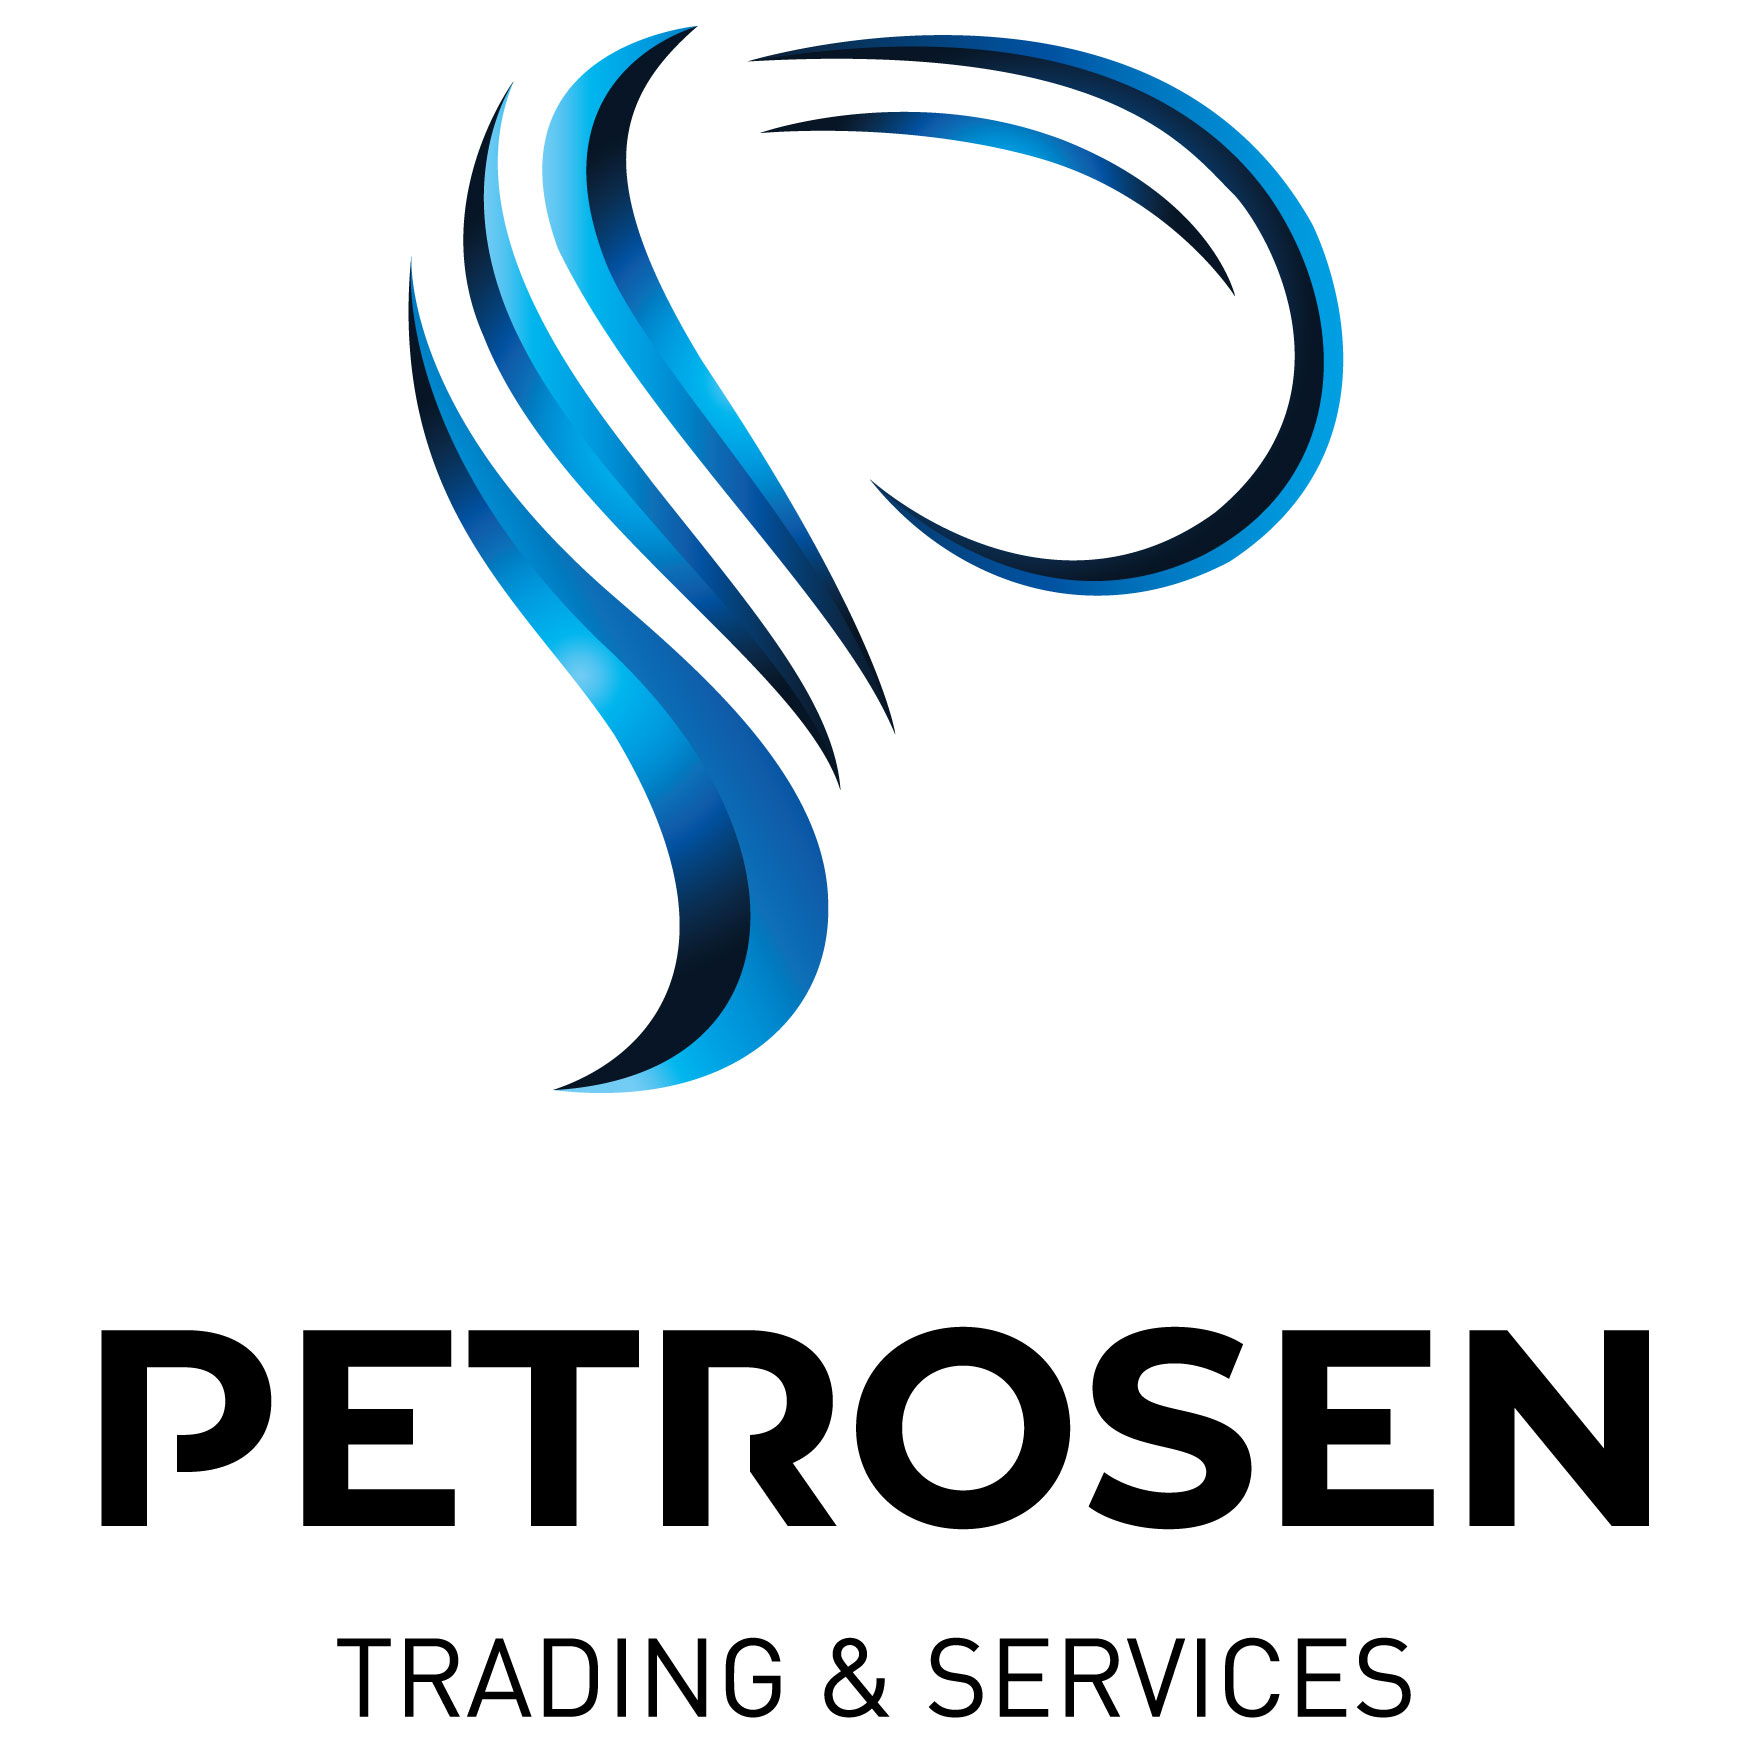 petrosen-logo---1750-px